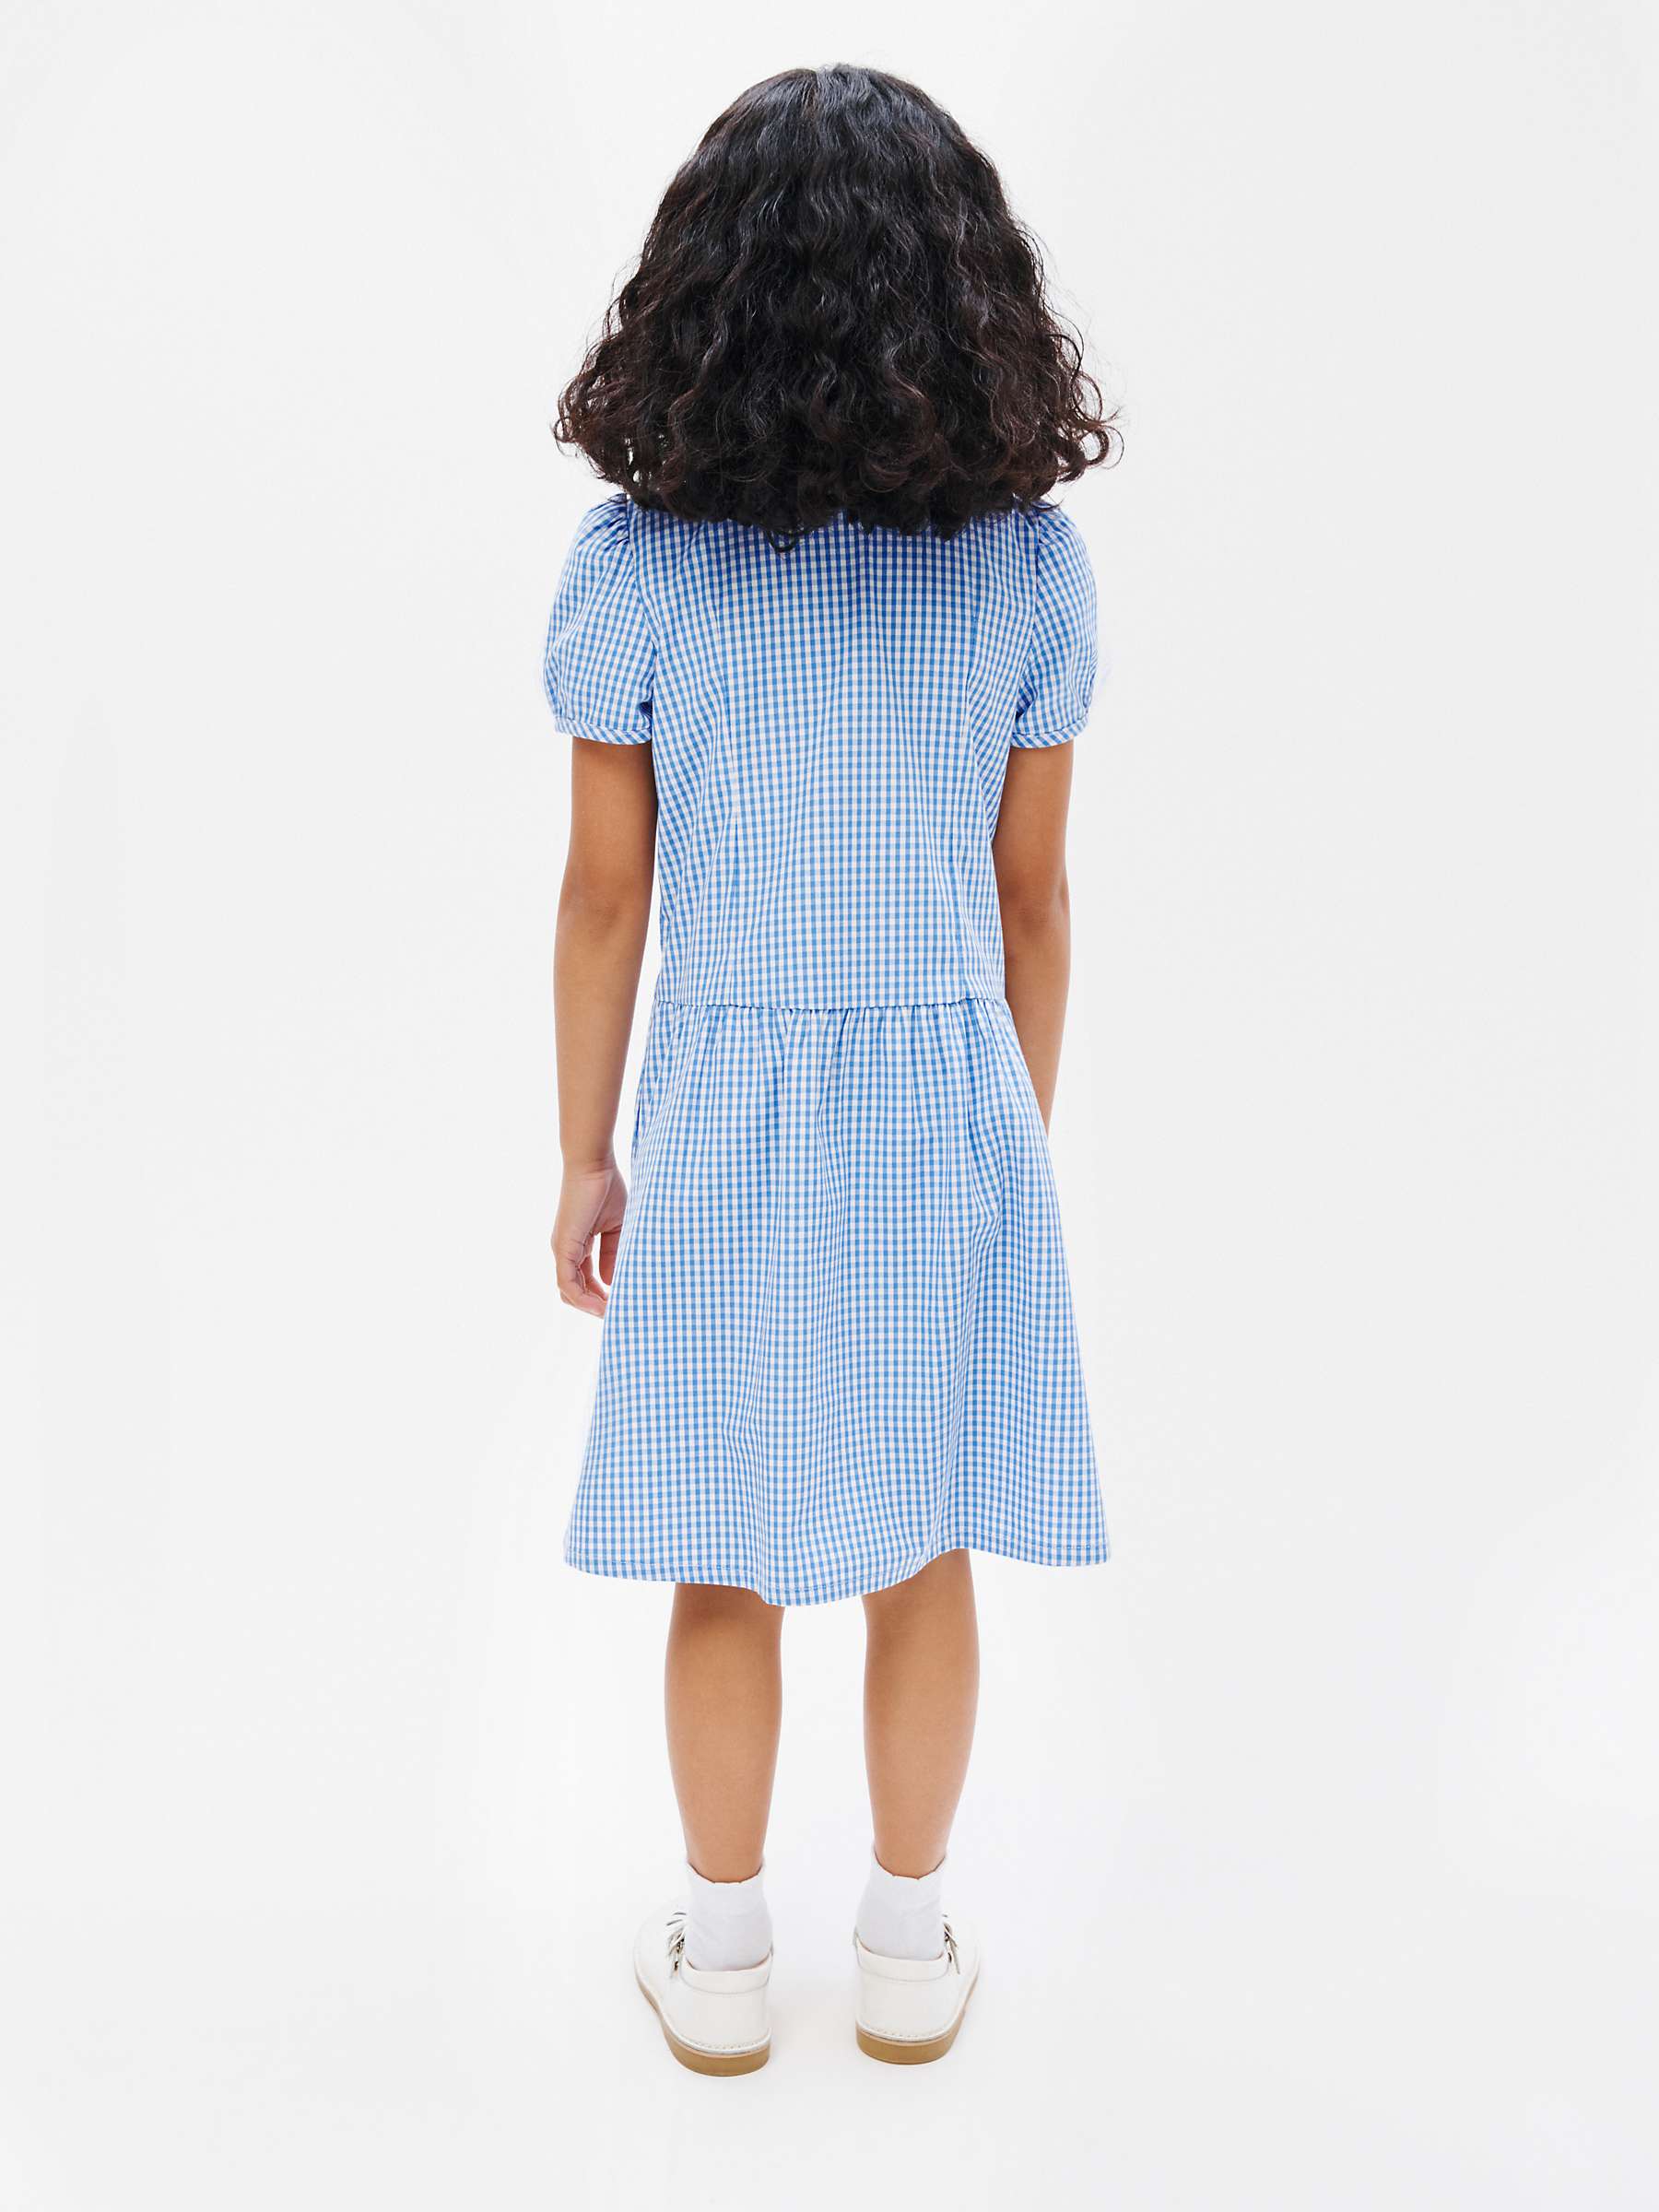 Buy John Lewis School Gingham A-Line Summer Dress Online at johnlewis.com